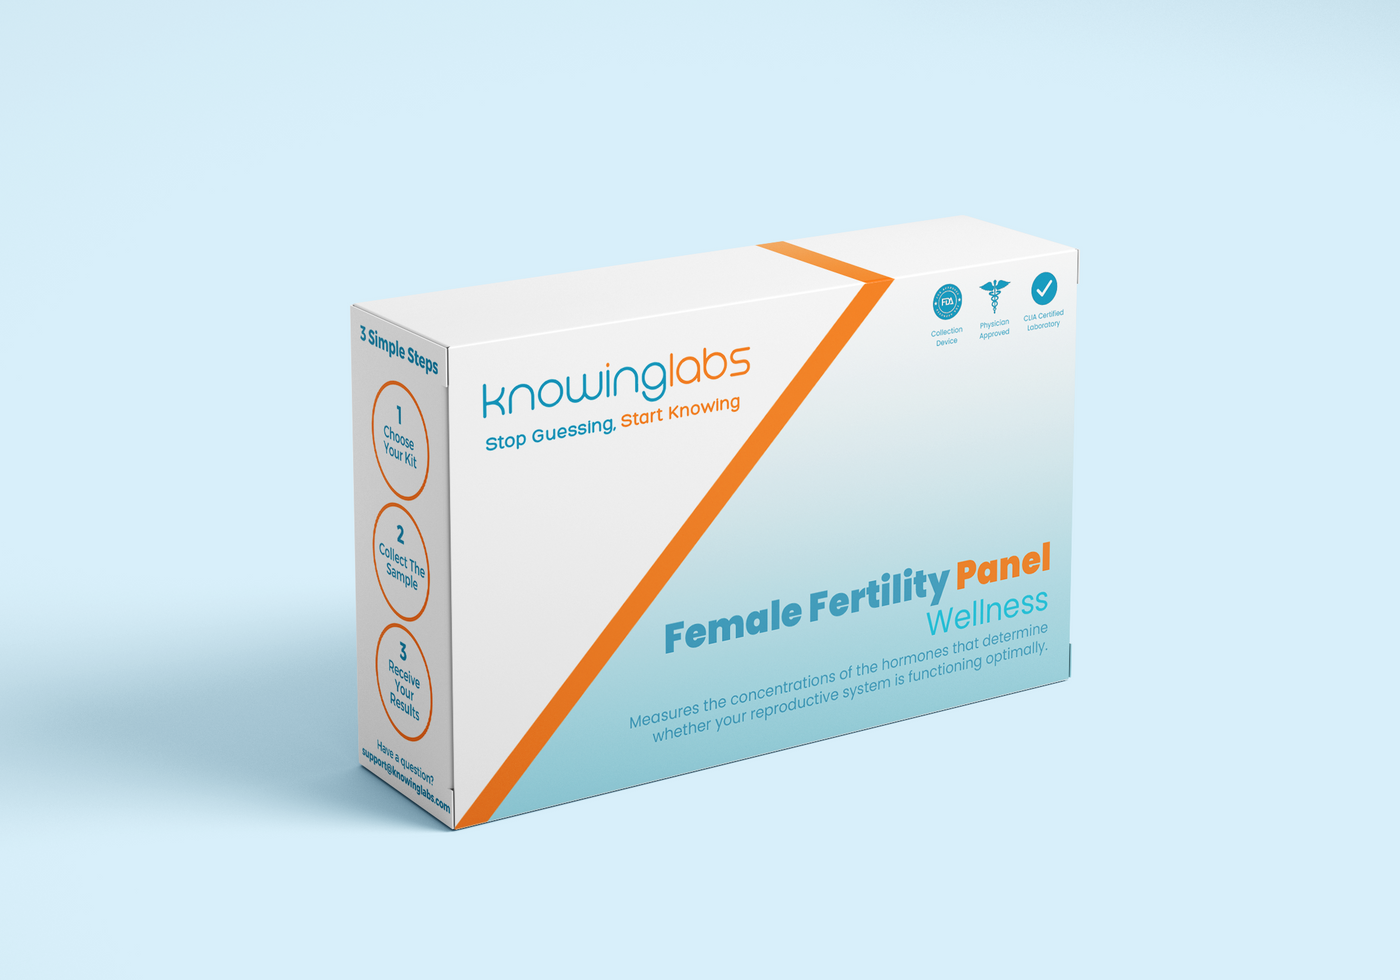 Female Fertility Panel